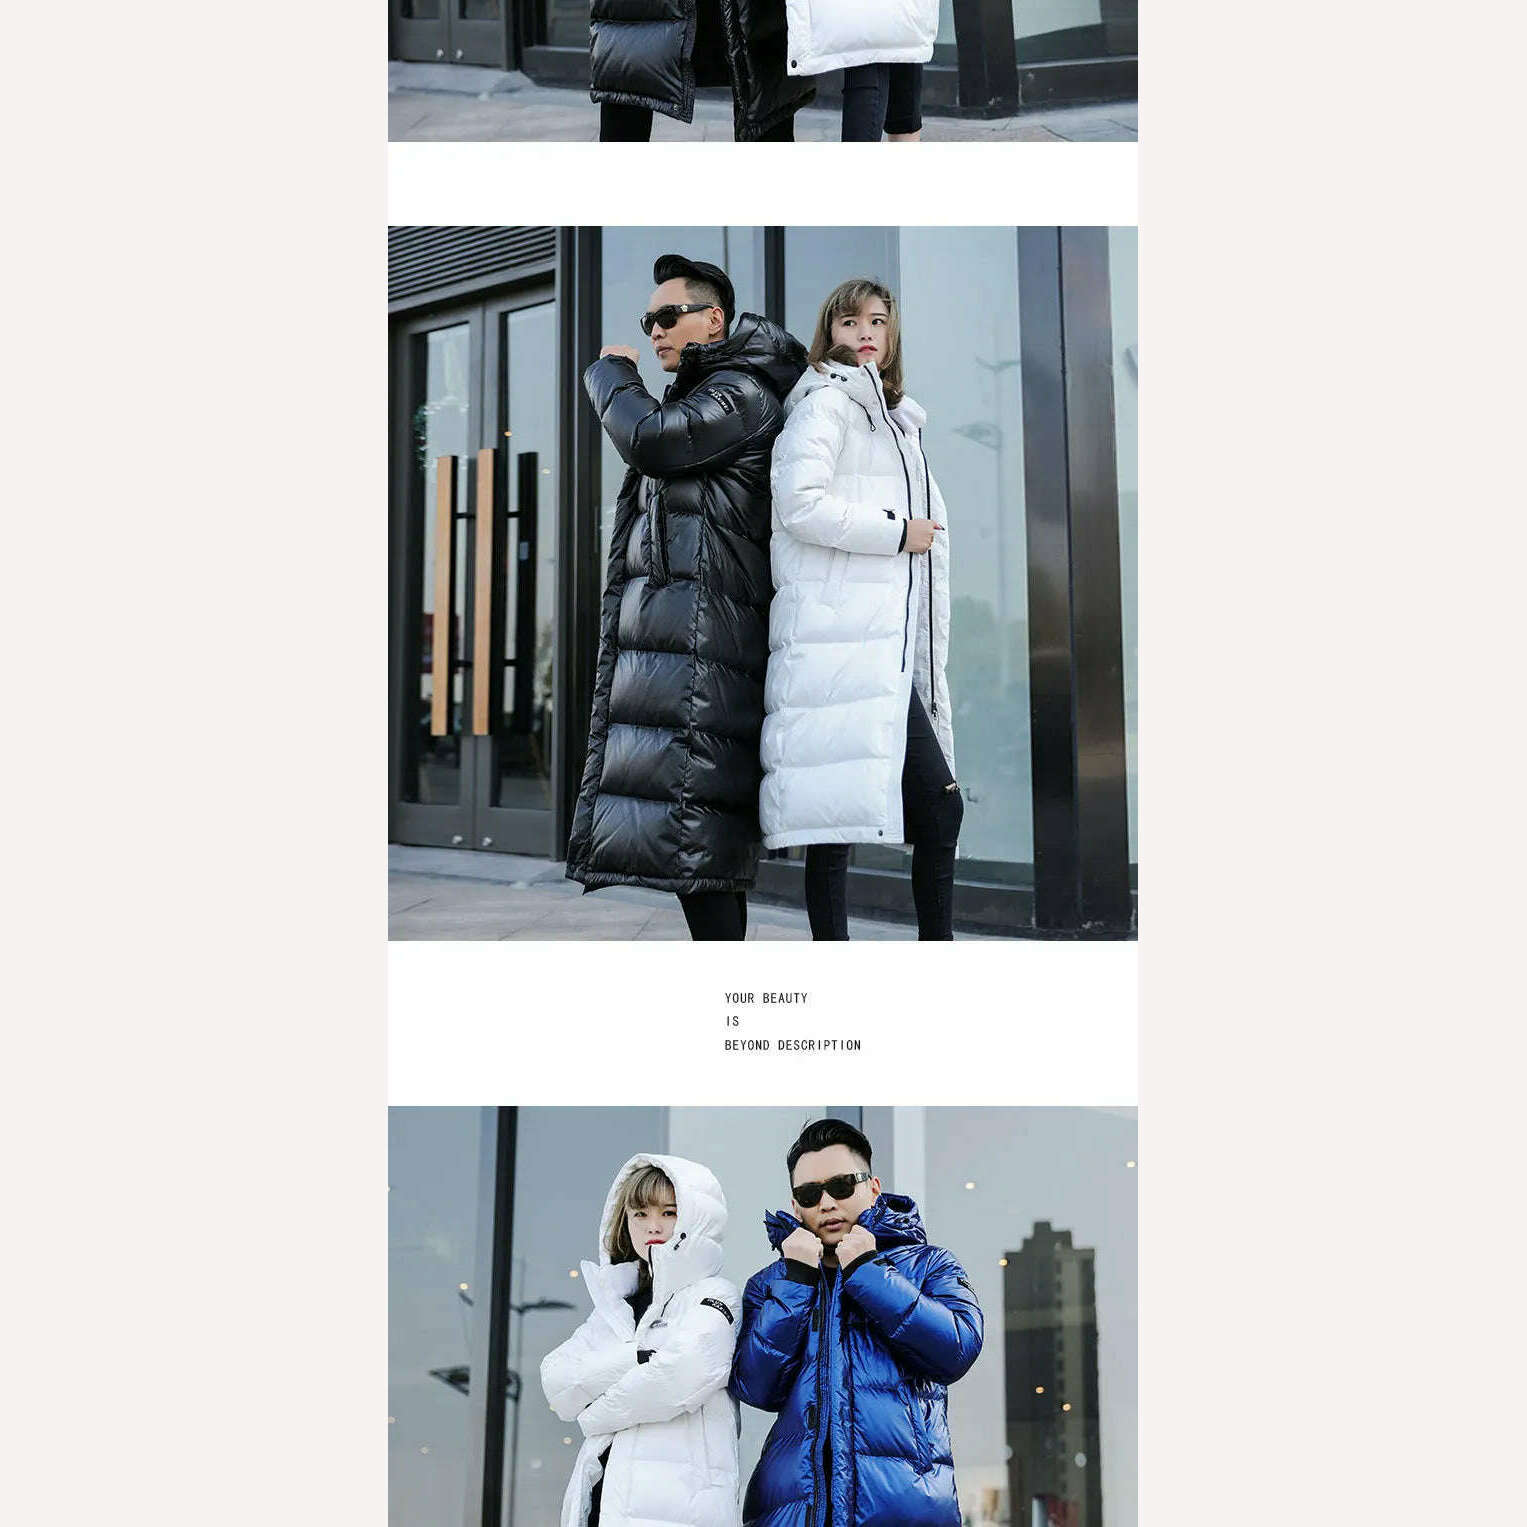 KIMLUD, Tcyeek Women's Down Jacket Hooded Thick Winter Coat Men Clothes 2020 Korean Warm Long Goose Down Jackets Fashion Outwear K-8893, KIMLUD Womens Clothes